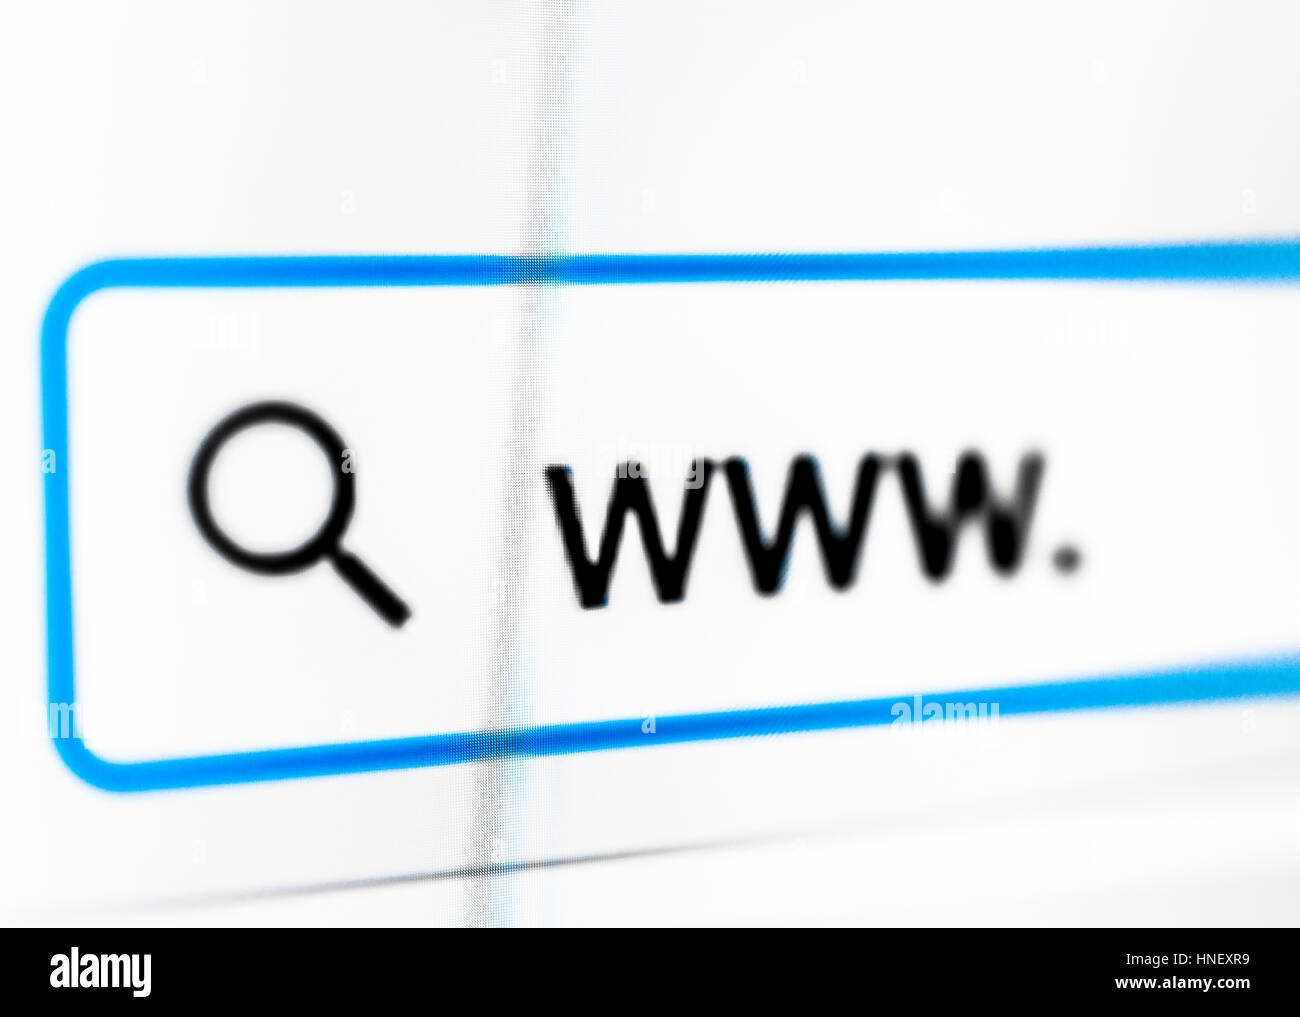 Internet browser, browser, search bar, search, URL, World Wide Web, Internet, symbolic image, screenshot Stock Photo